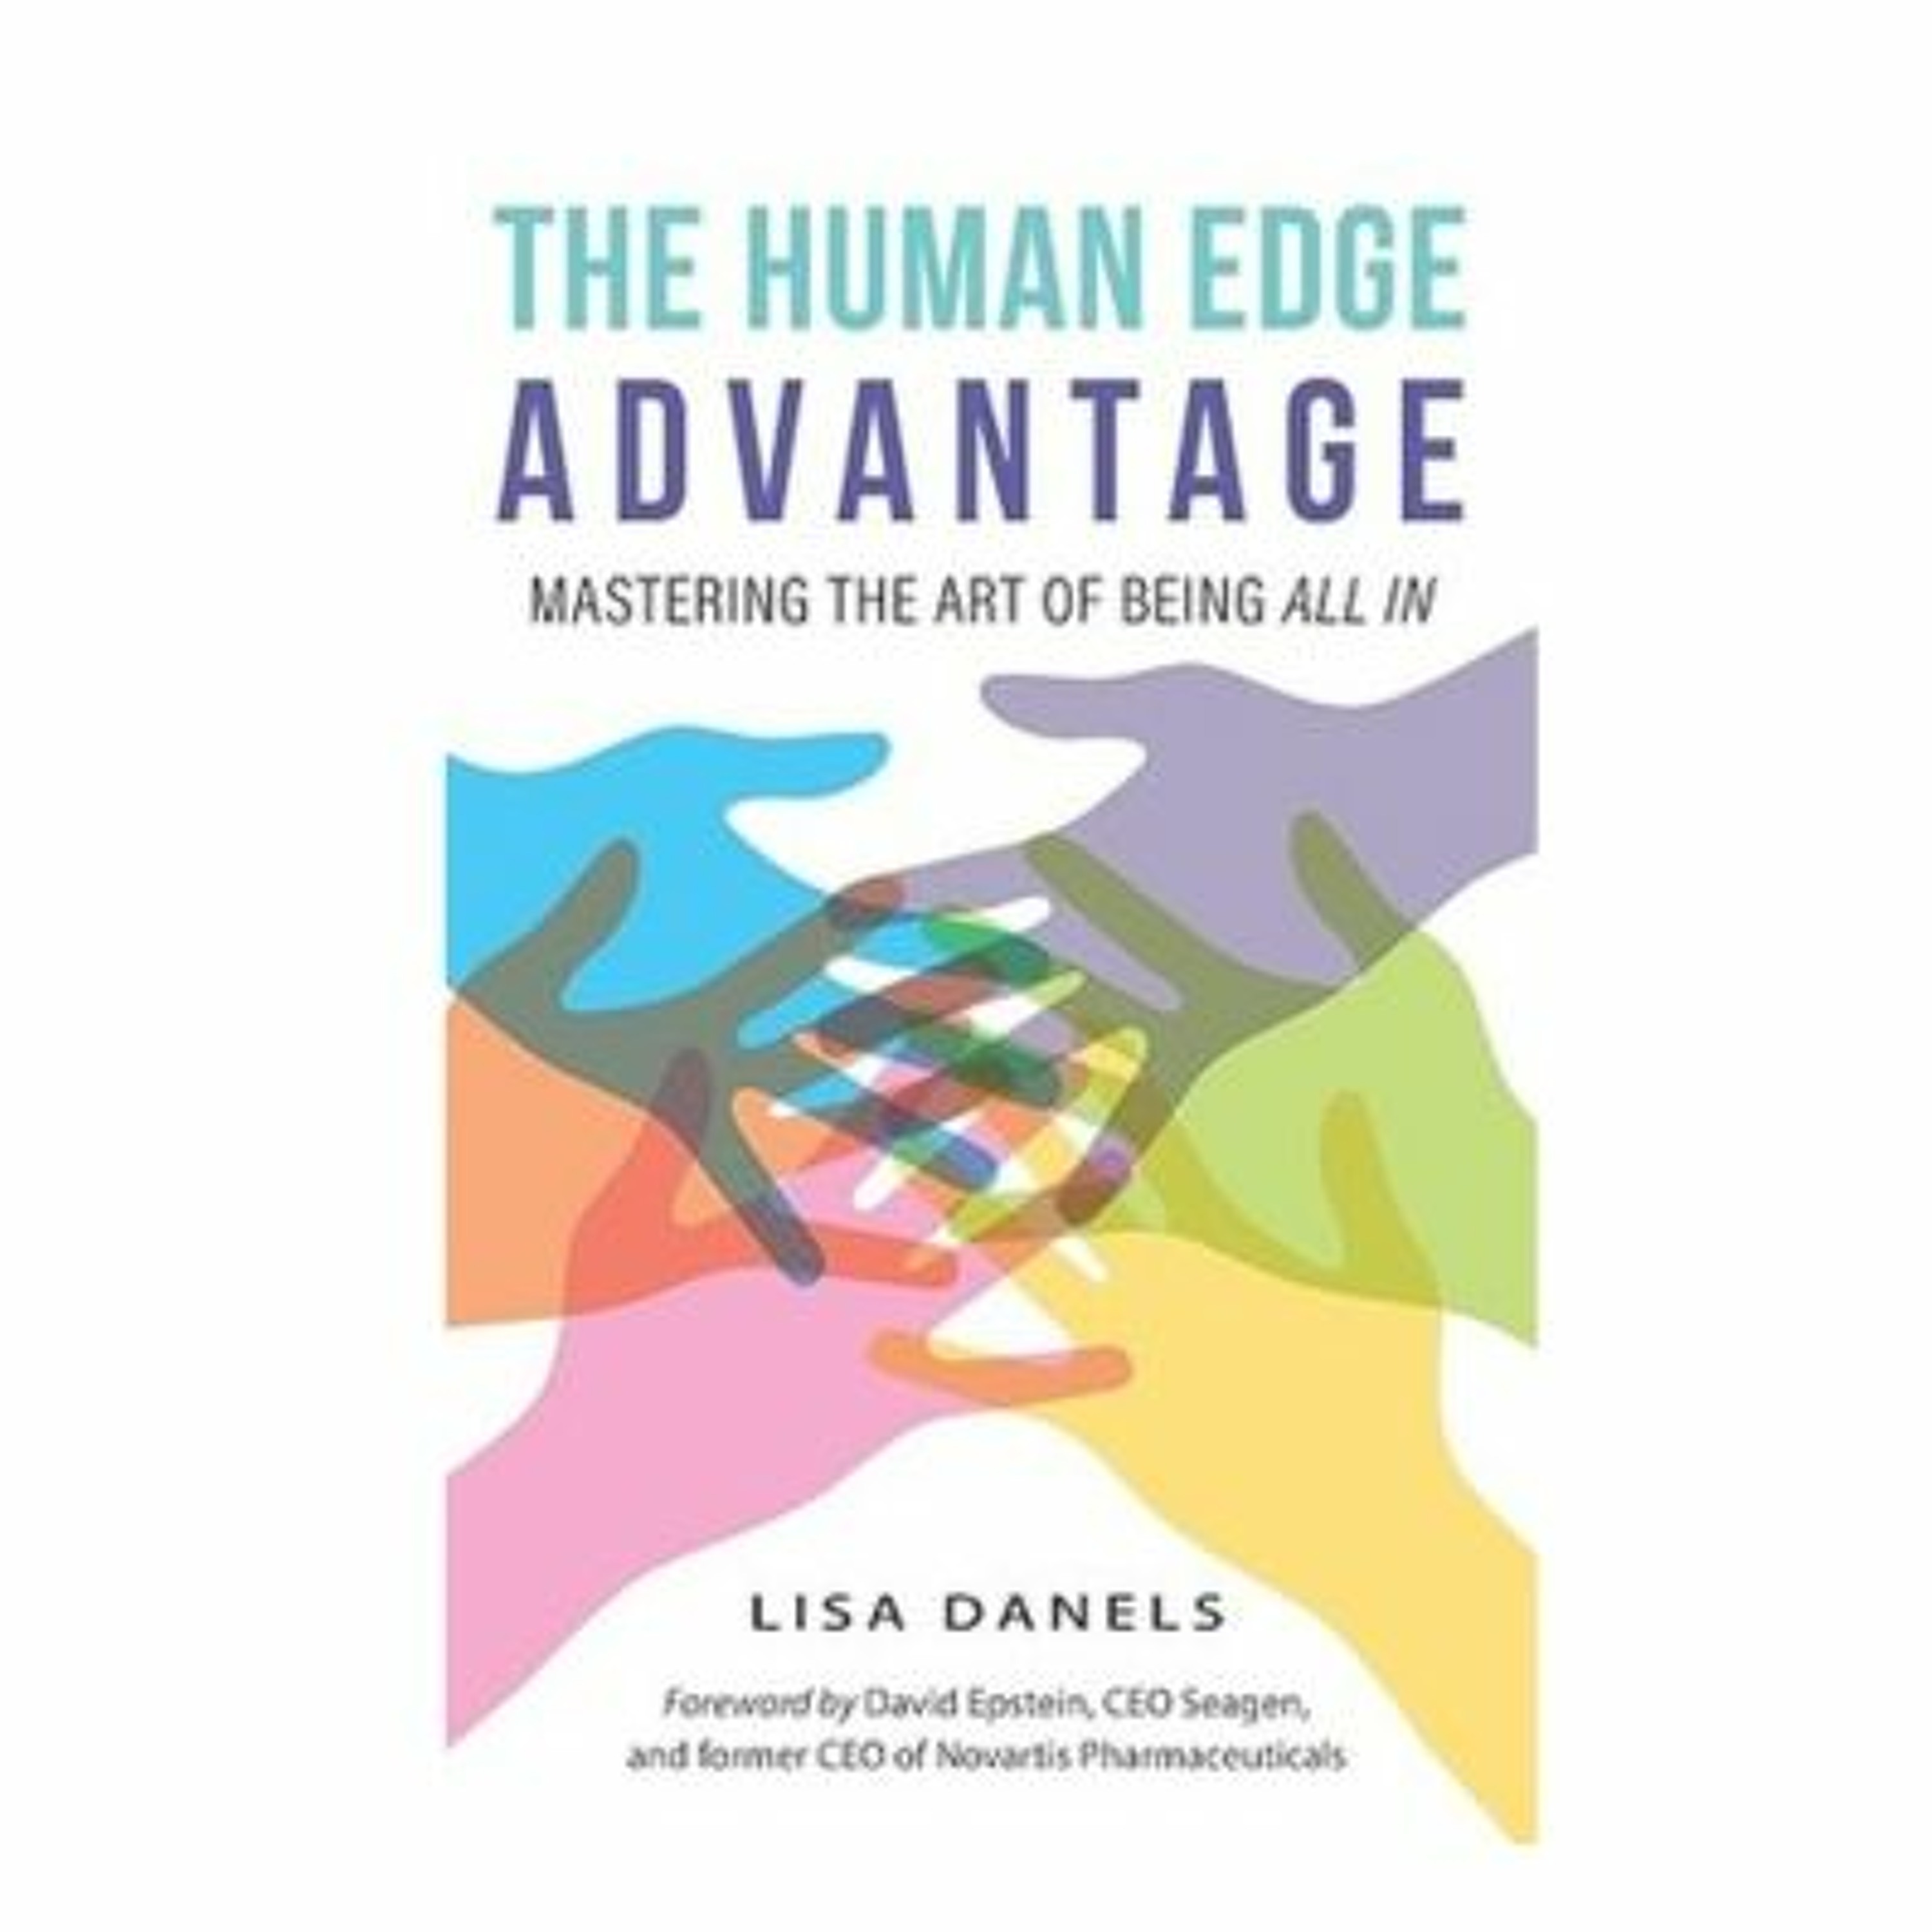 Podcast 1074: The Human Edge Advantage with Lisa Danels